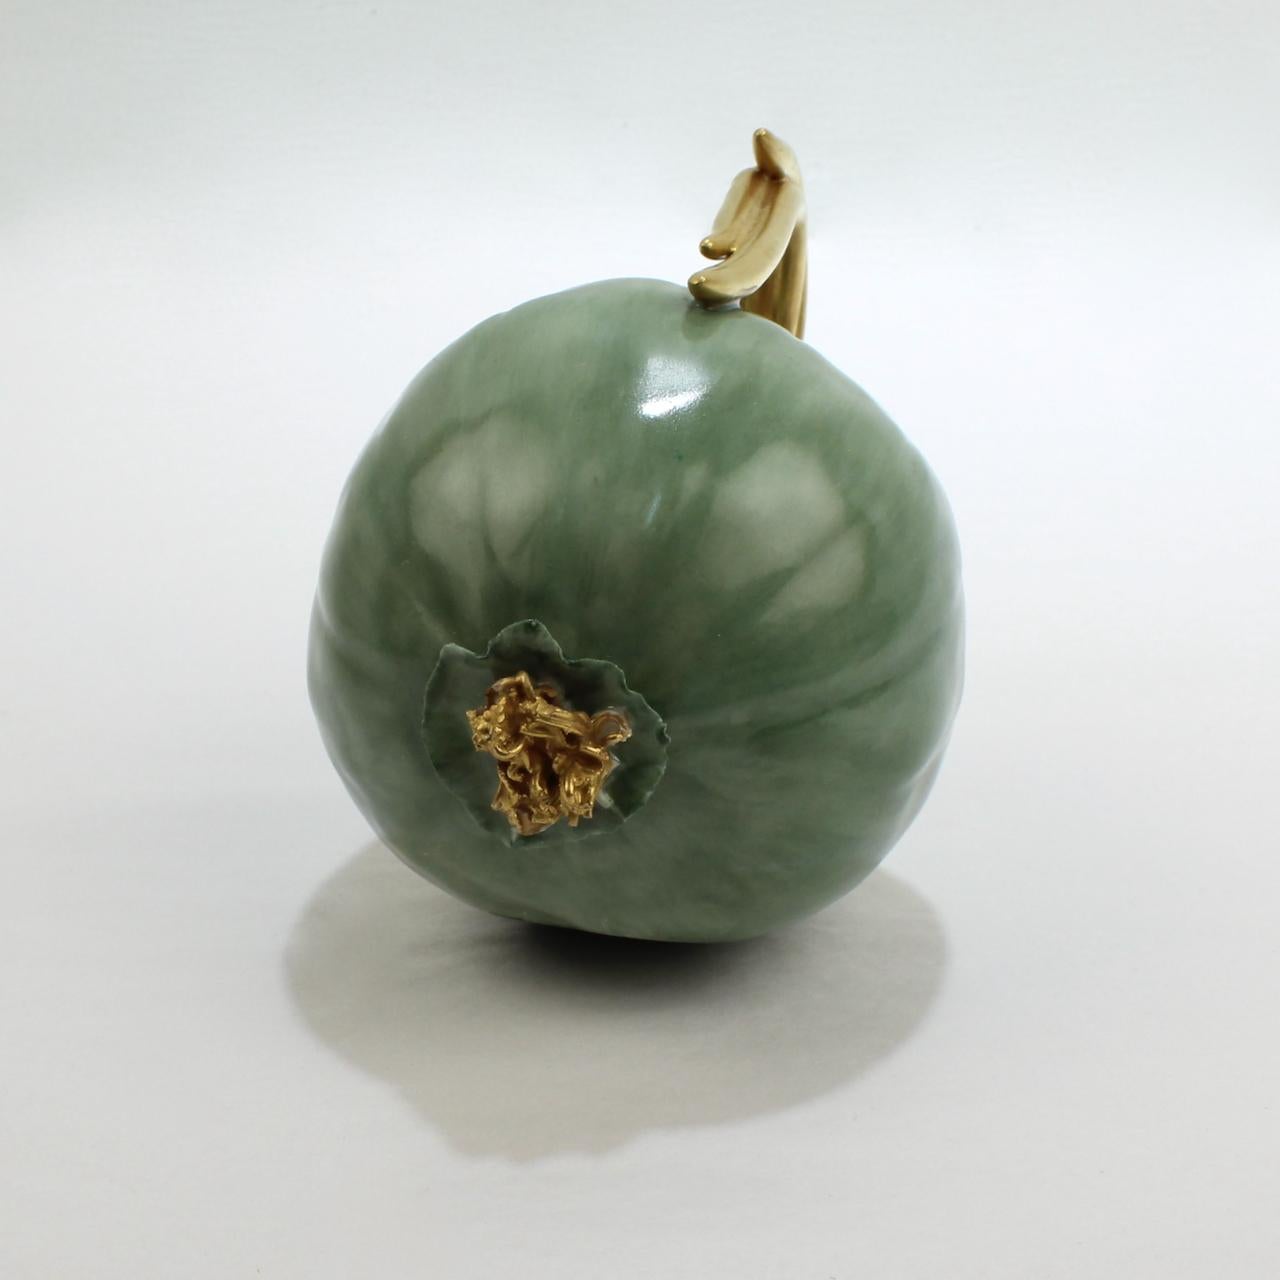 Contemporary Katherine Houston Porcelain Figural Green Onion Model or Figurine